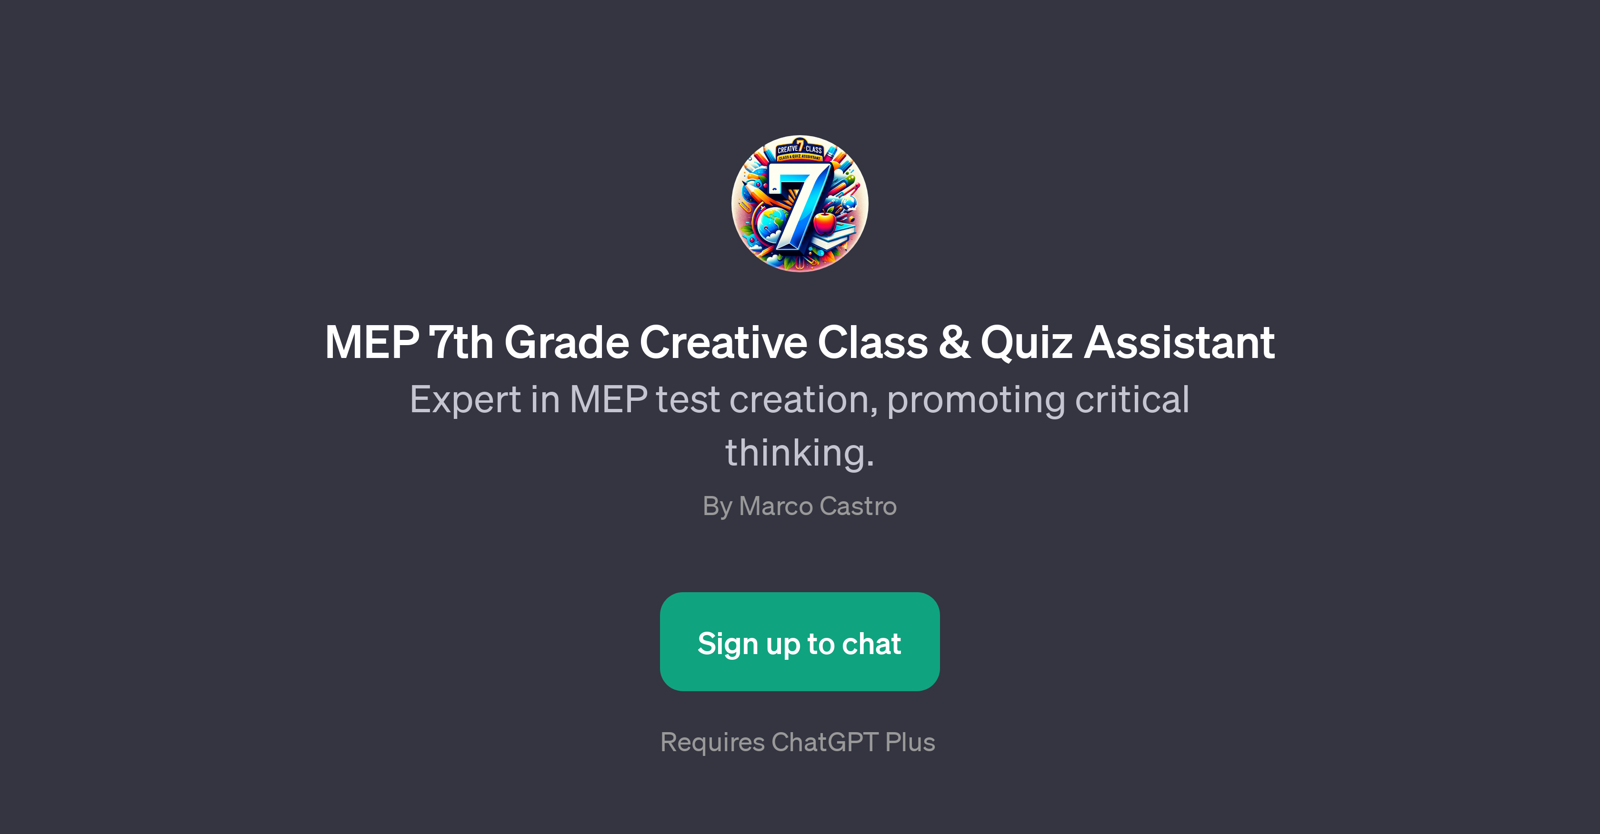 MEP 7th Grade Creative Class & Quiz Assistant website